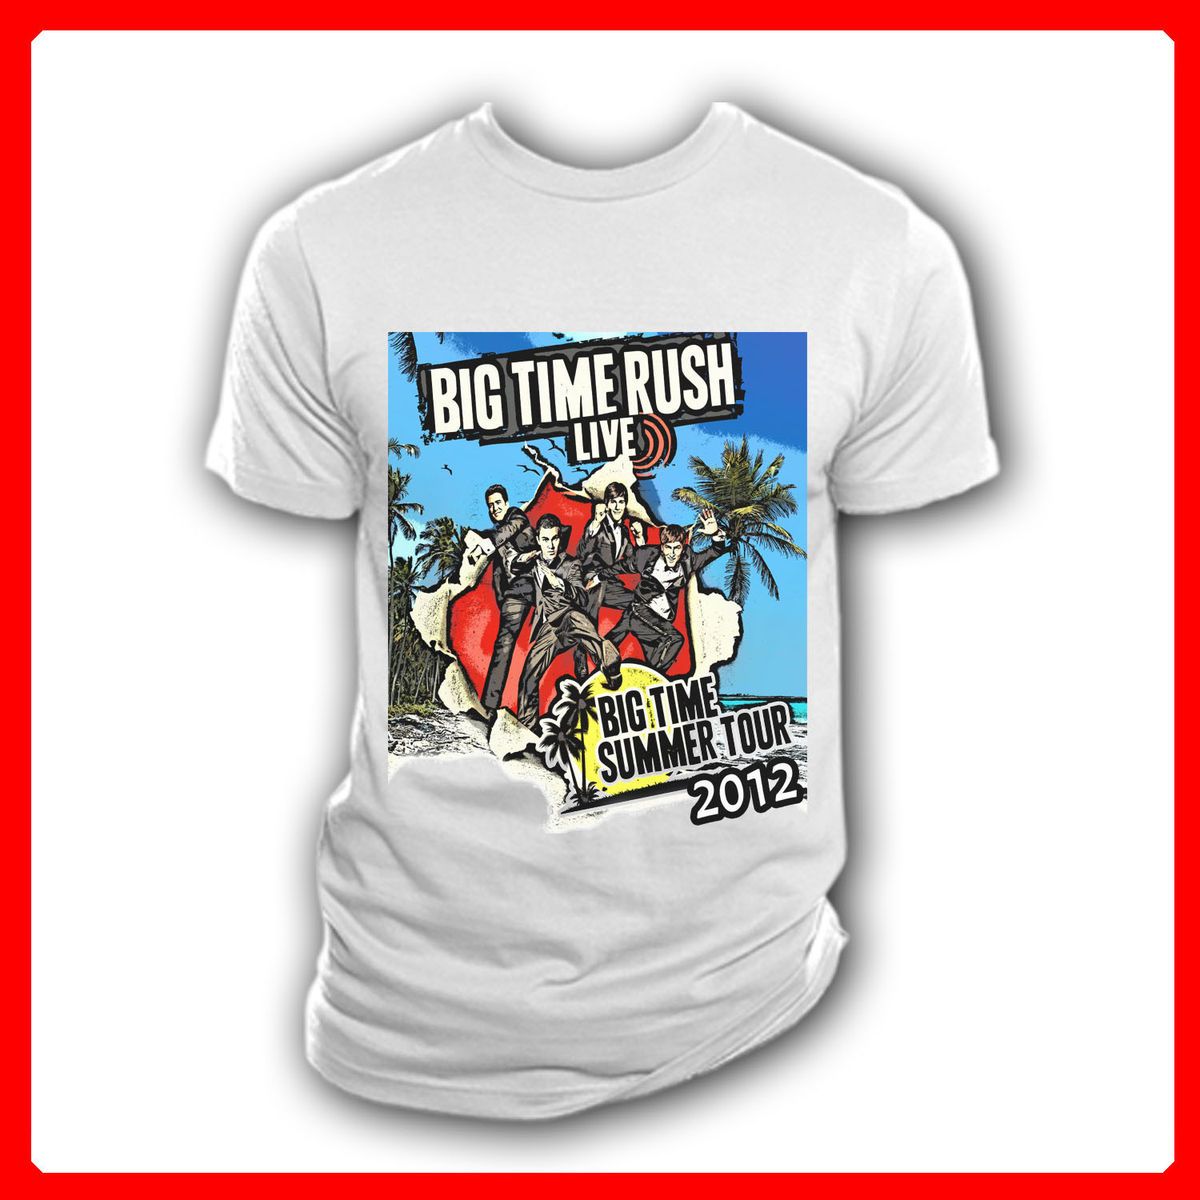 Big Time Rush Summer Tour 2012 Concert BTR White T Shirt Size s M L XL 